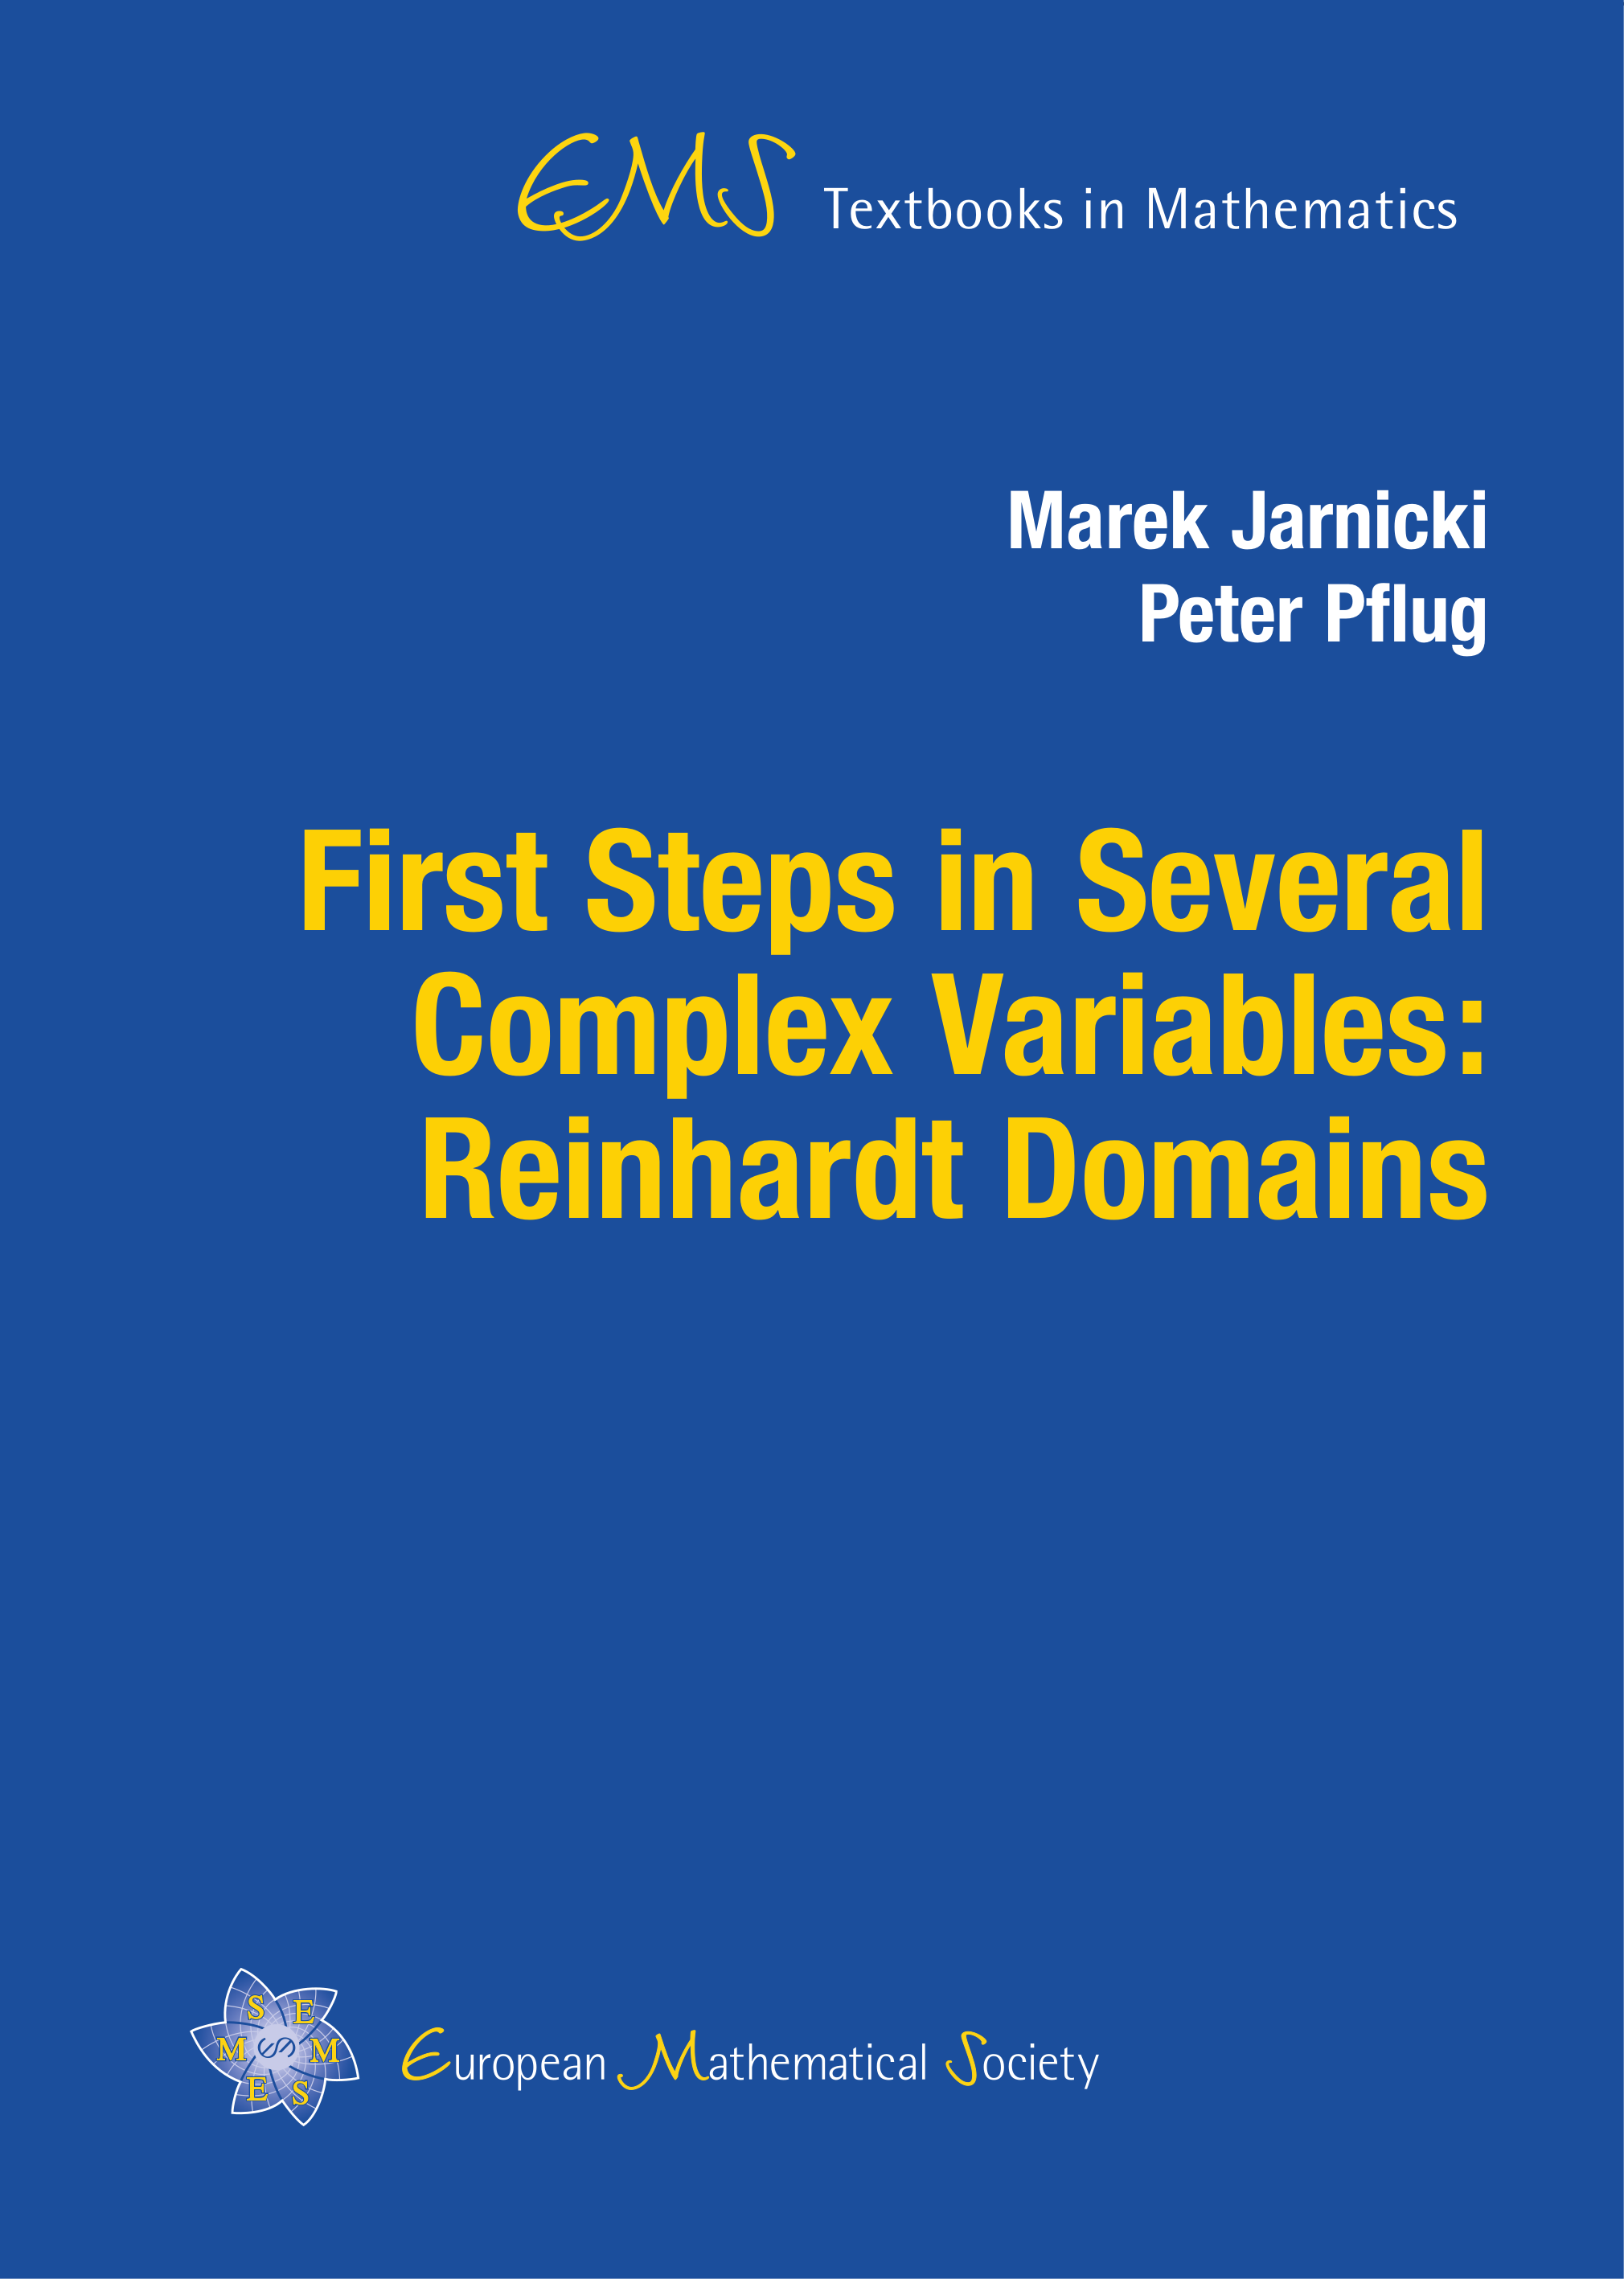 Biholomorphisms of Reinhardt domains cover